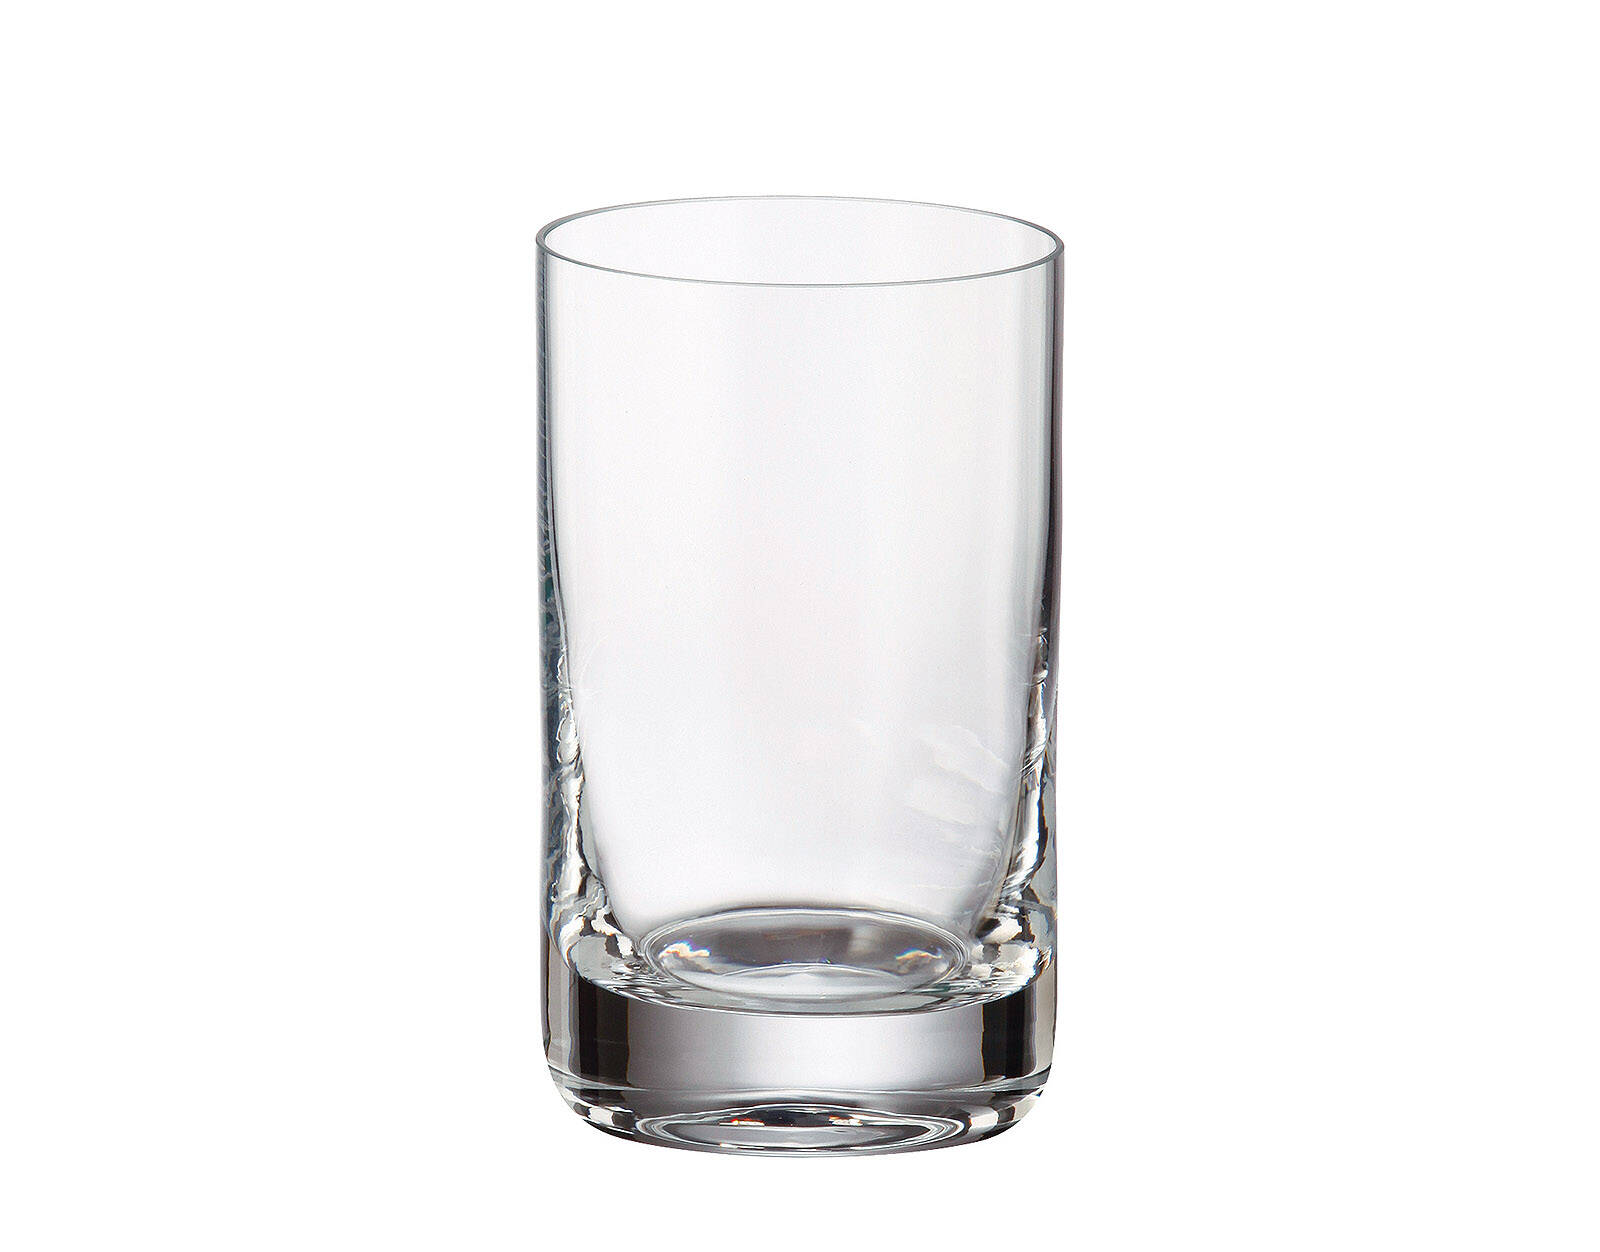 Стекольный стакан. Crystalite Bohemia стаканы. Набор стаканов 410мл.6шт."Larus". Стакан стеклянный MS-652315. Стакан 150 мл стекло.